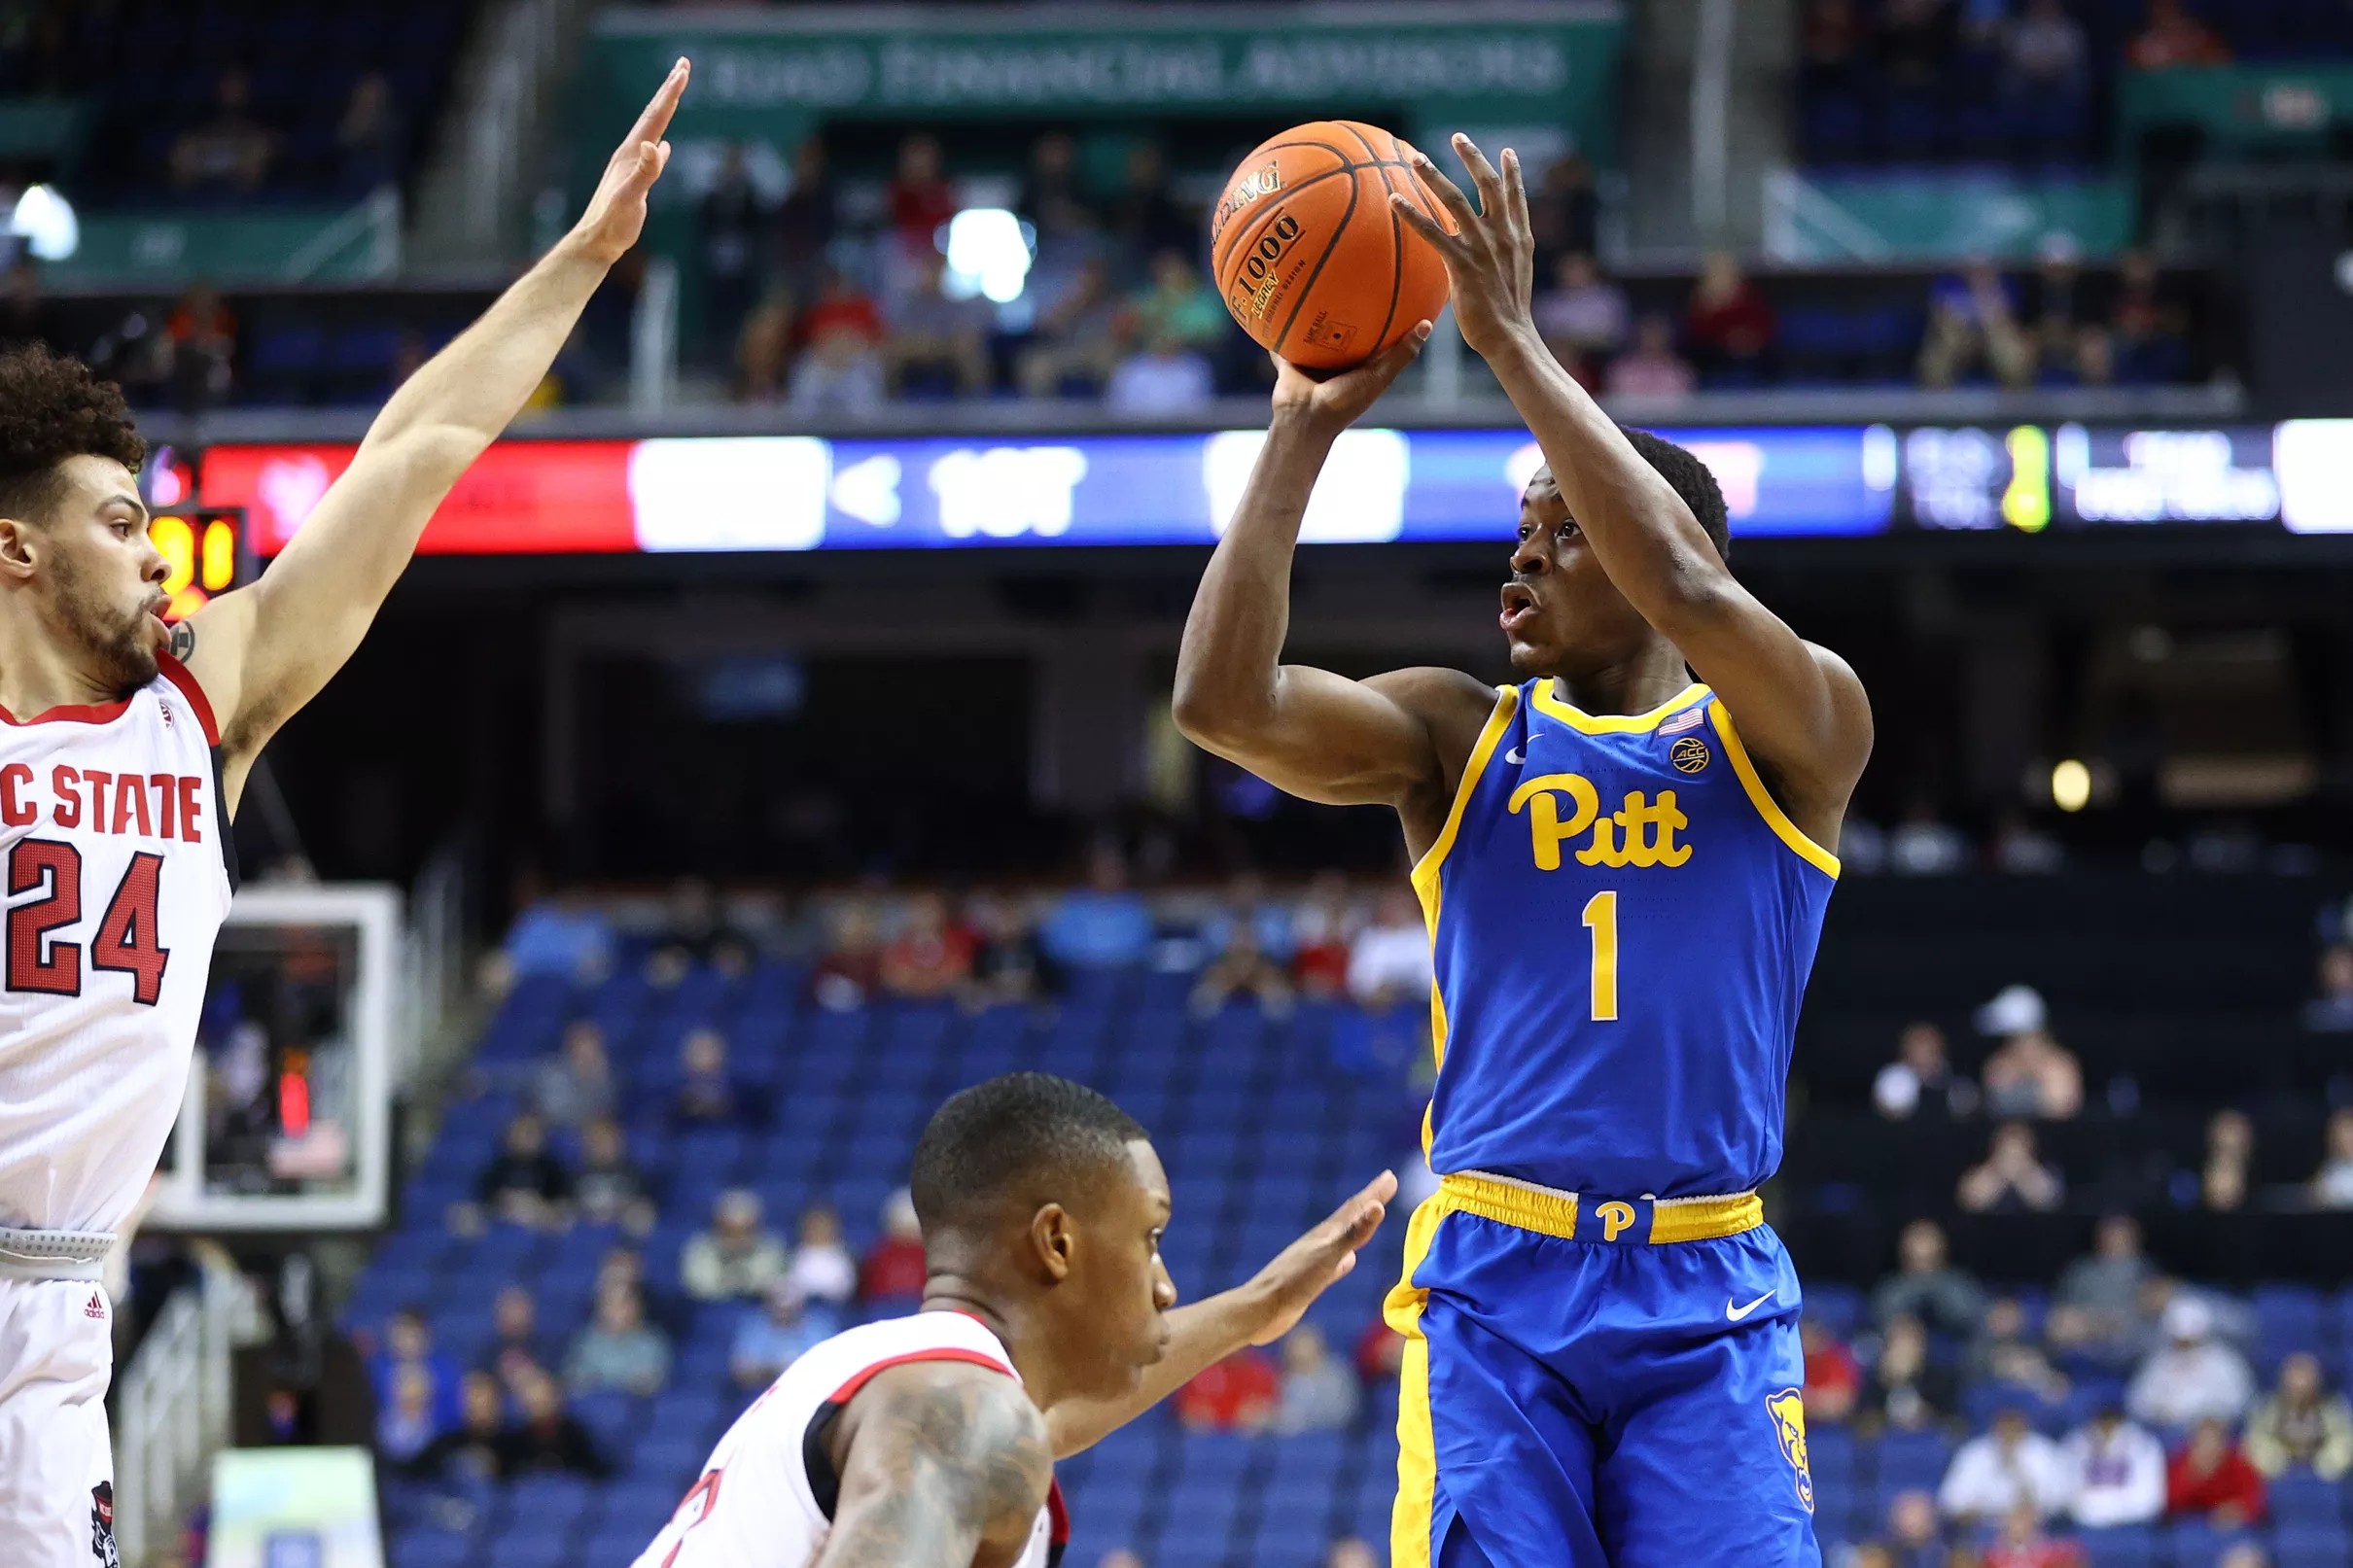 Pitt men’s basketball team prepared to tip off season